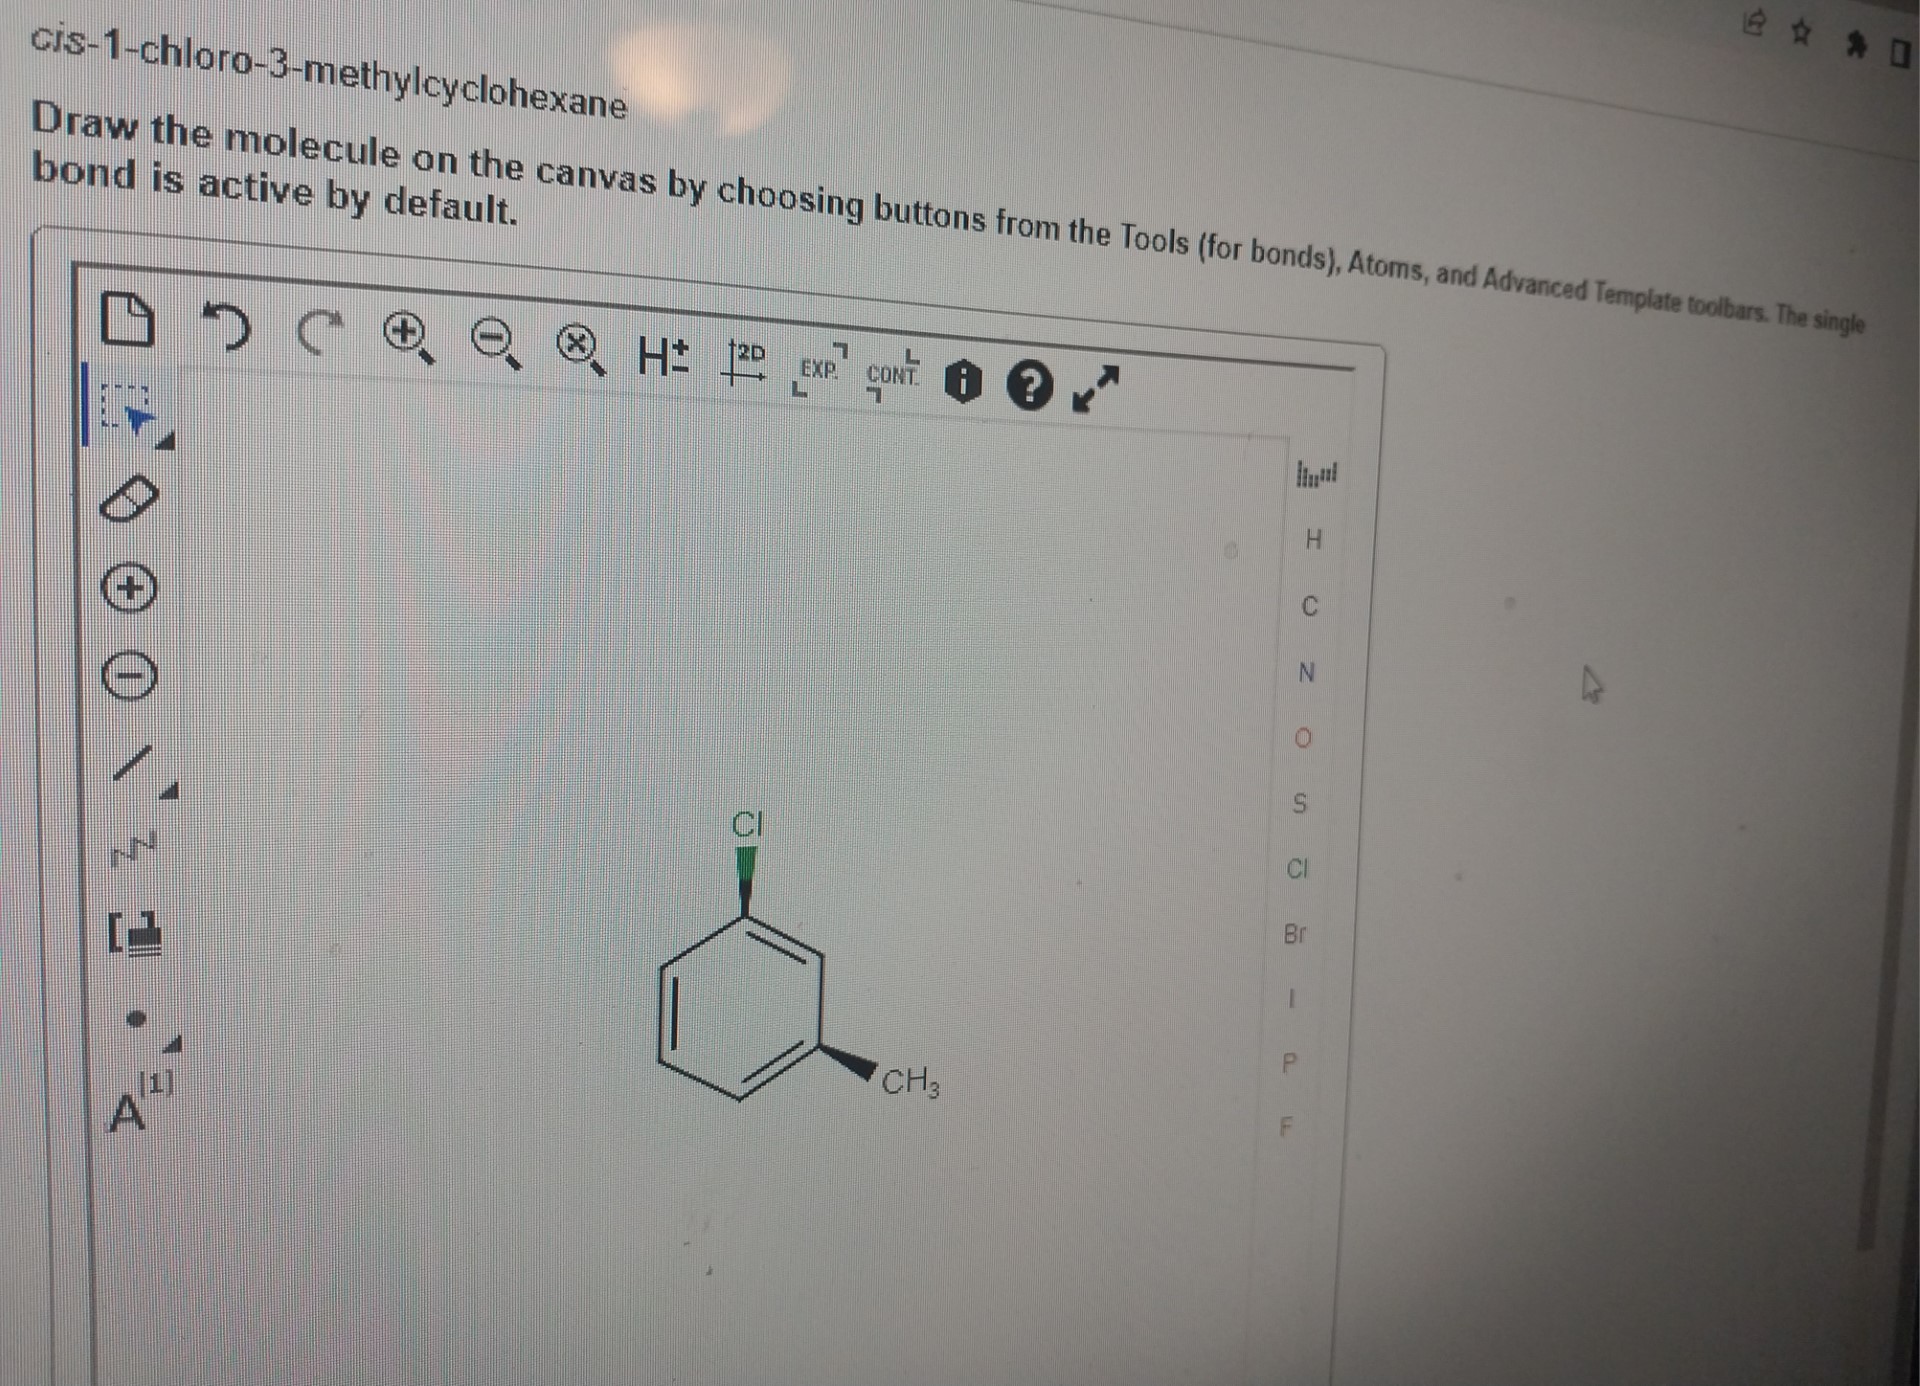 Solved cis1chloro3methylcyclohexane Draw the molecule on